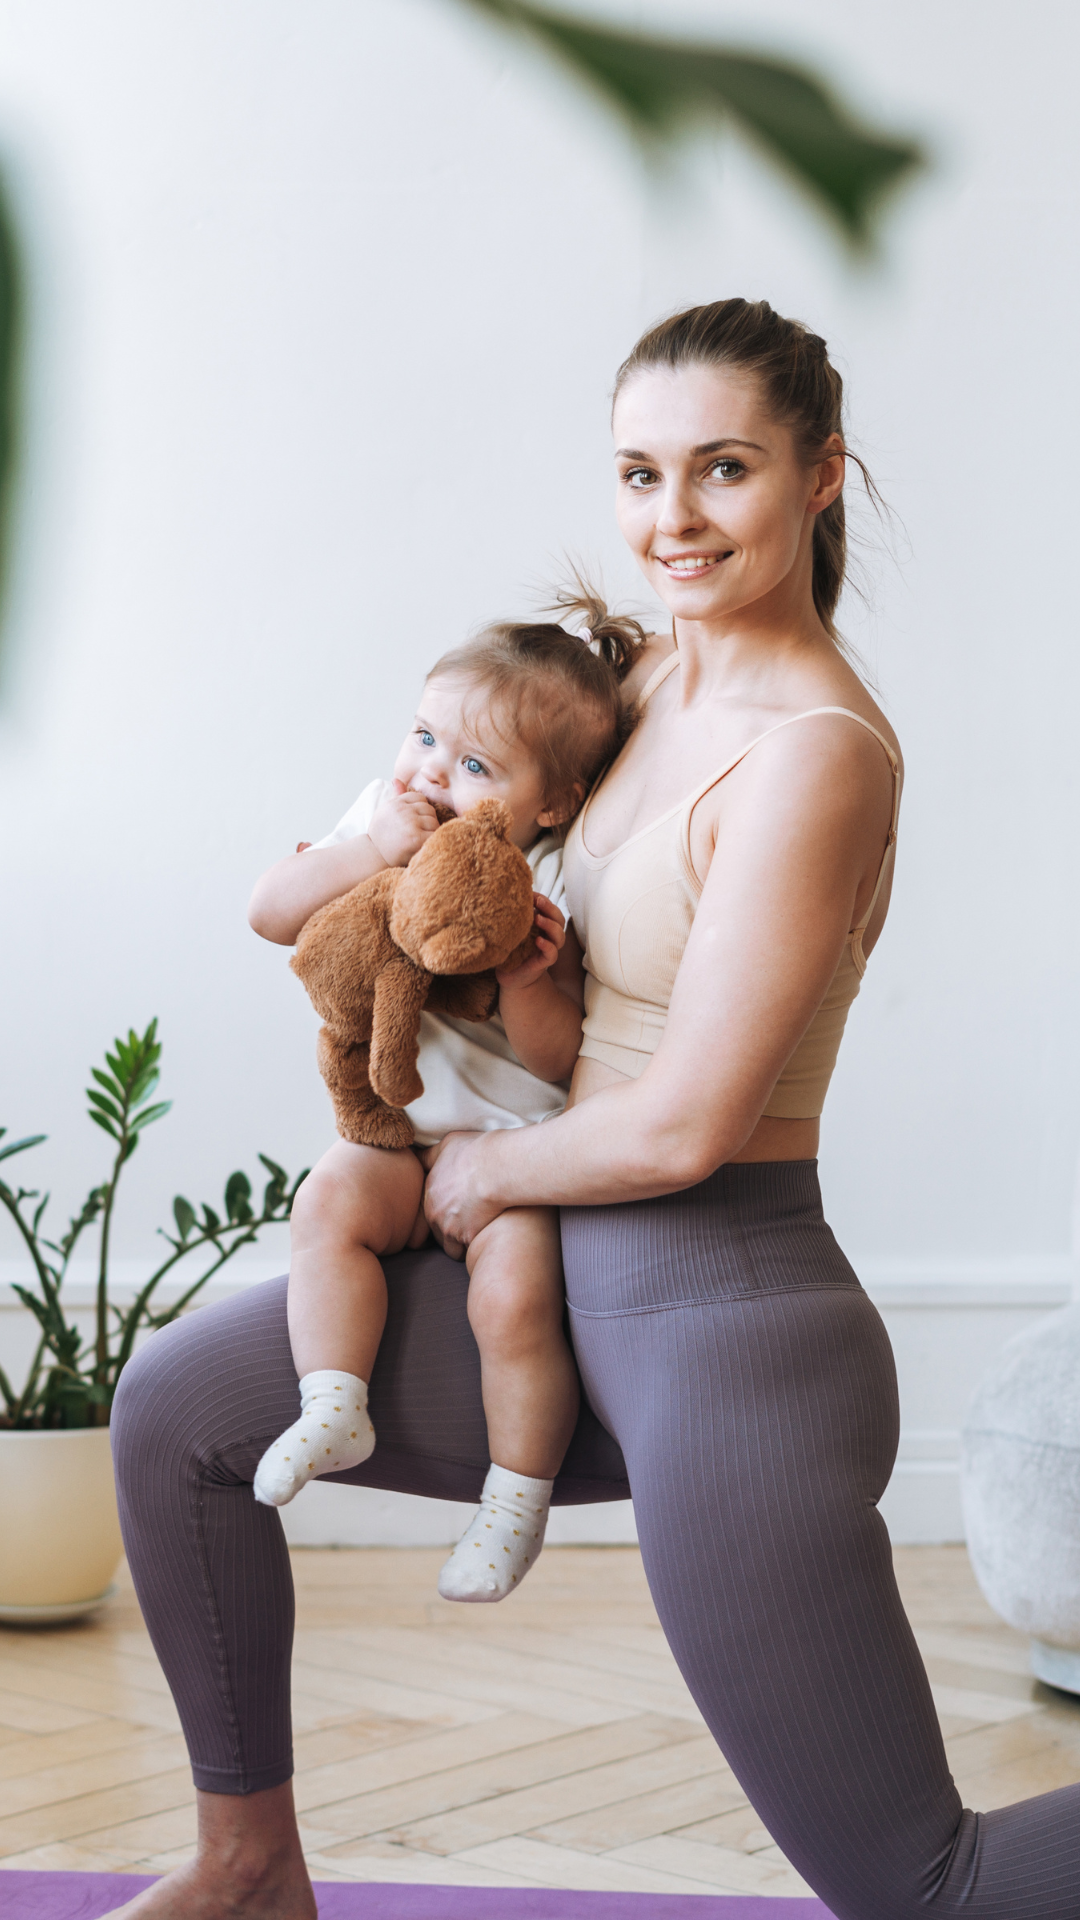 Mama & Baby Yoga